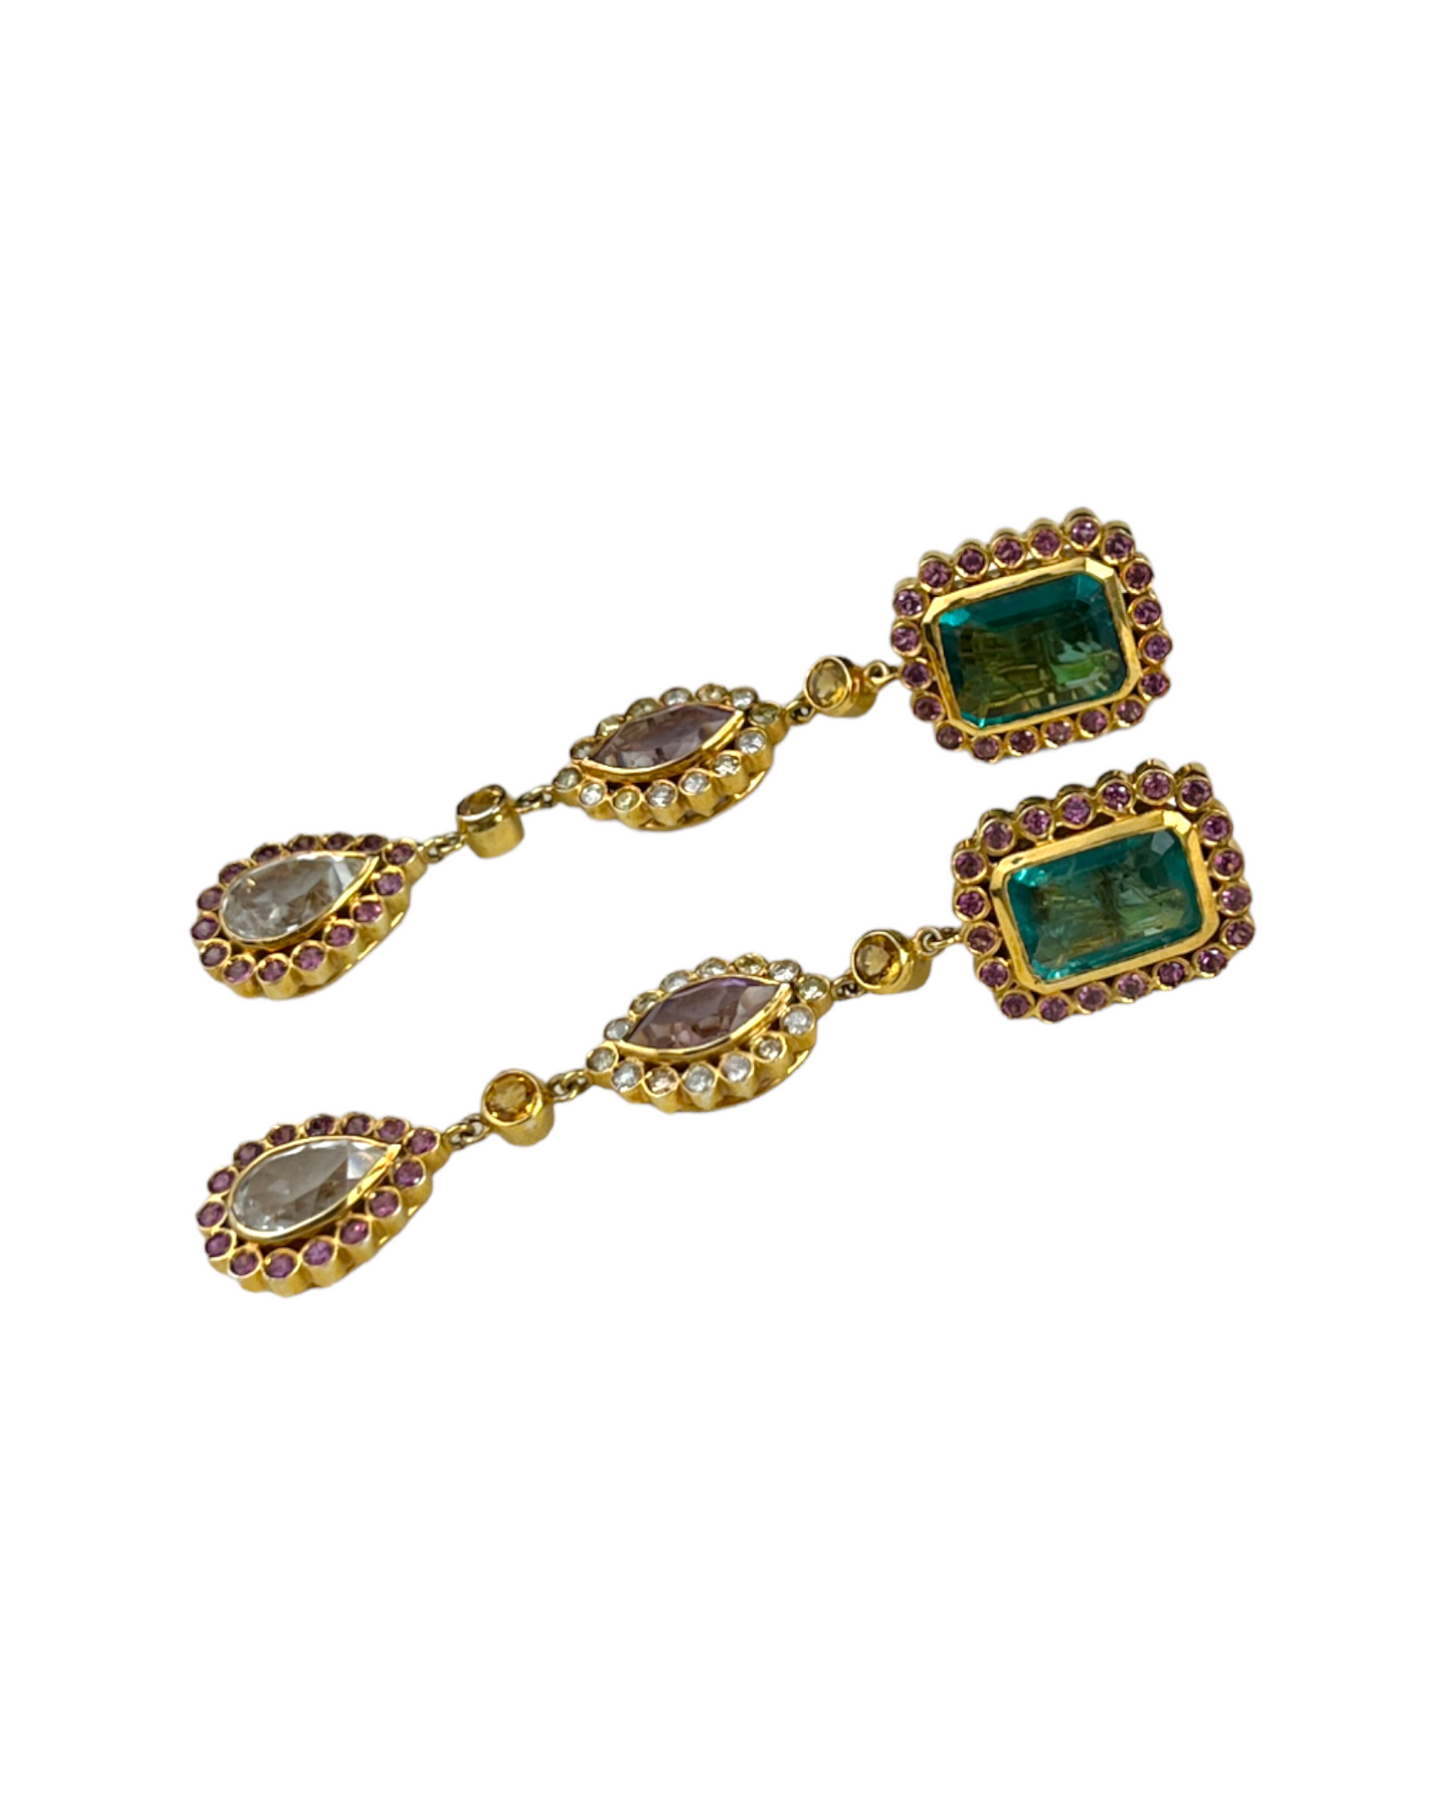 Namazte Maharaja Earrings with Florite, Diamonds, Garnets, Amethyst and Quartz